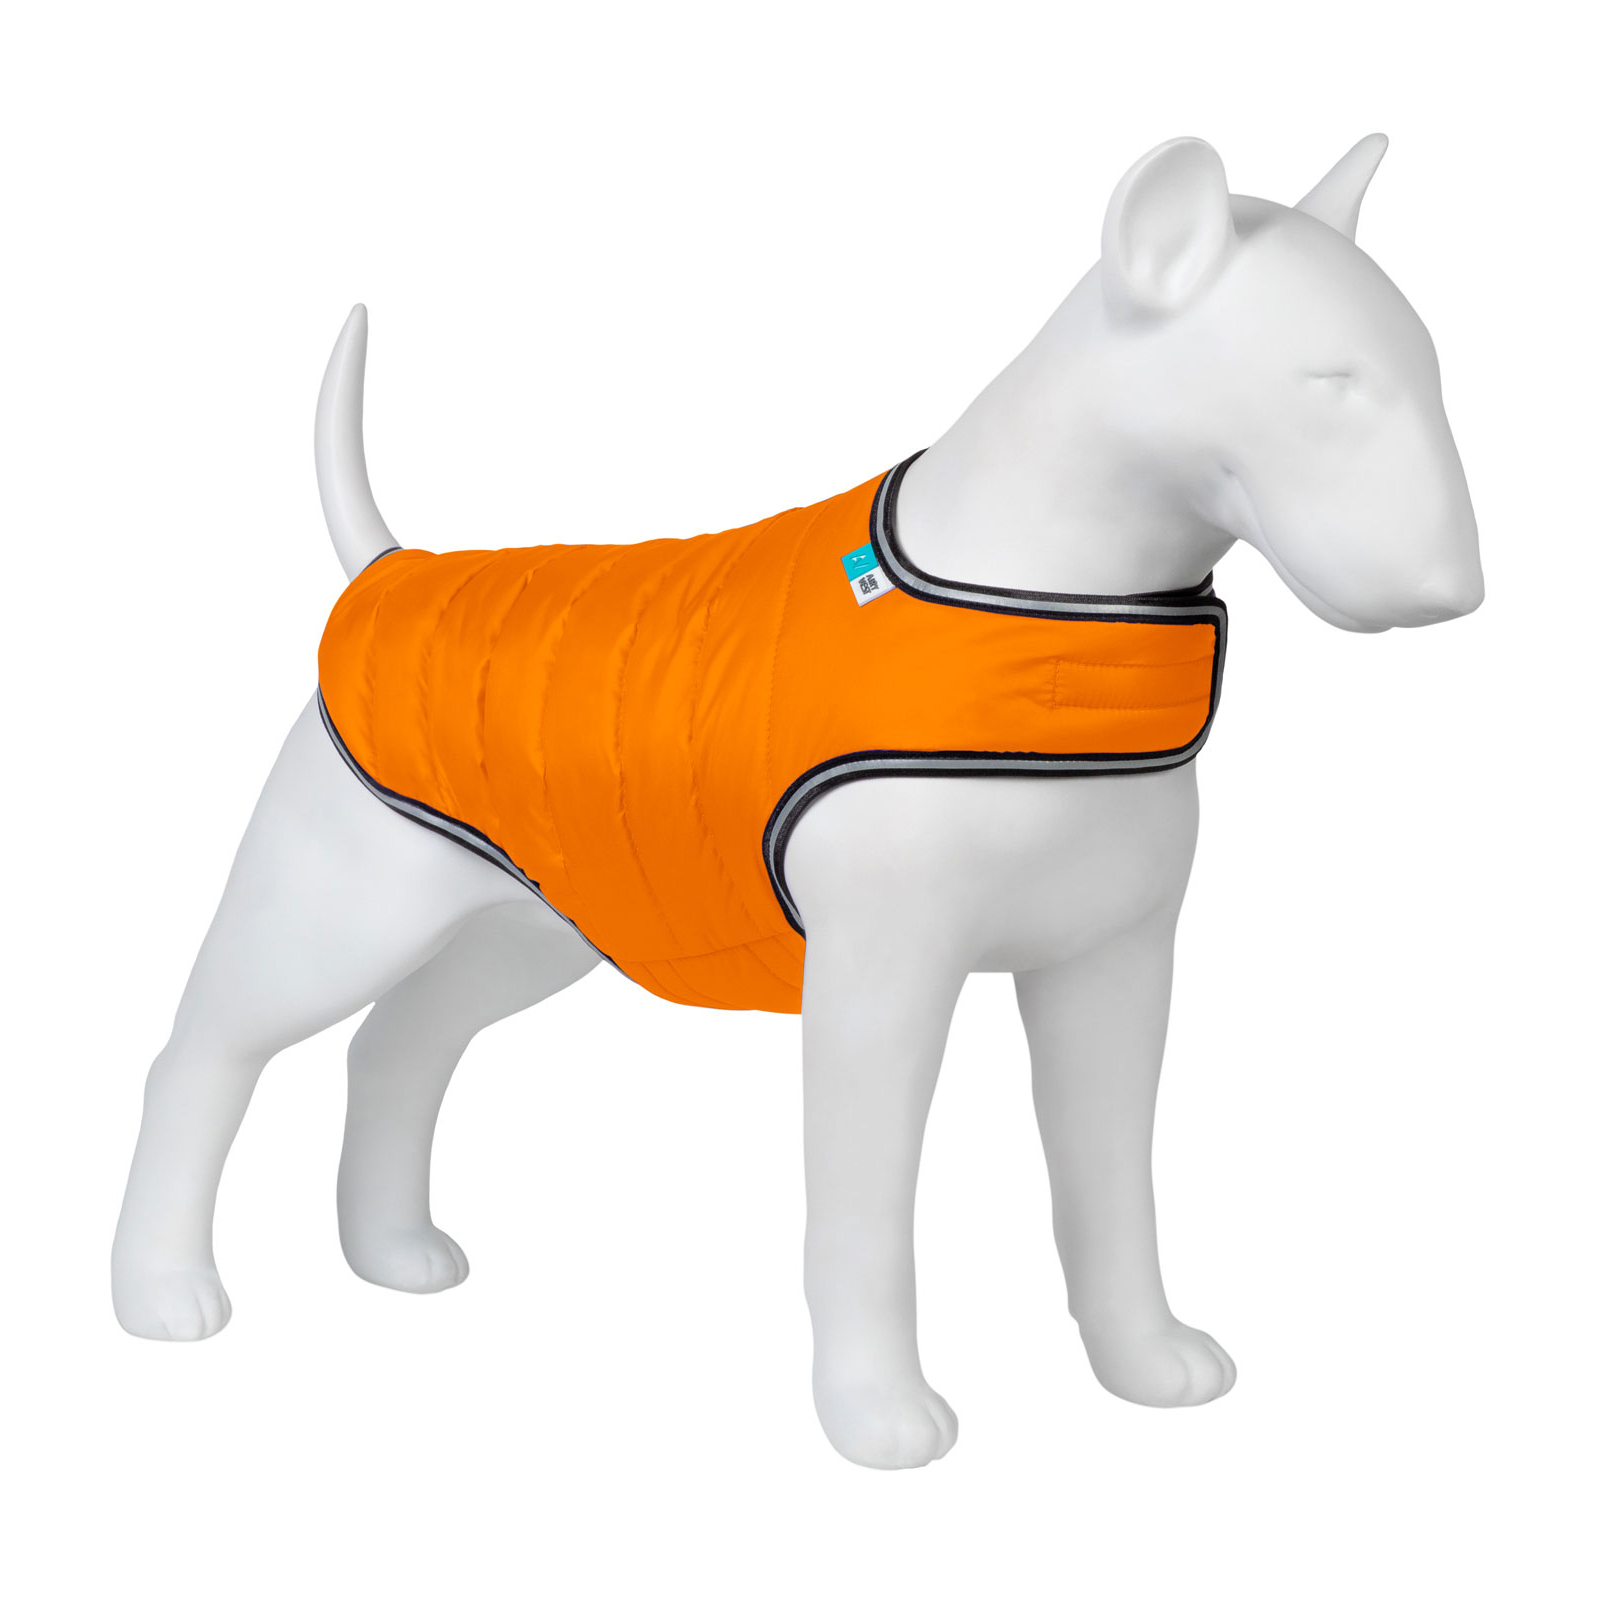 Курточка для животных Airy Vest S оранжевая (15424)